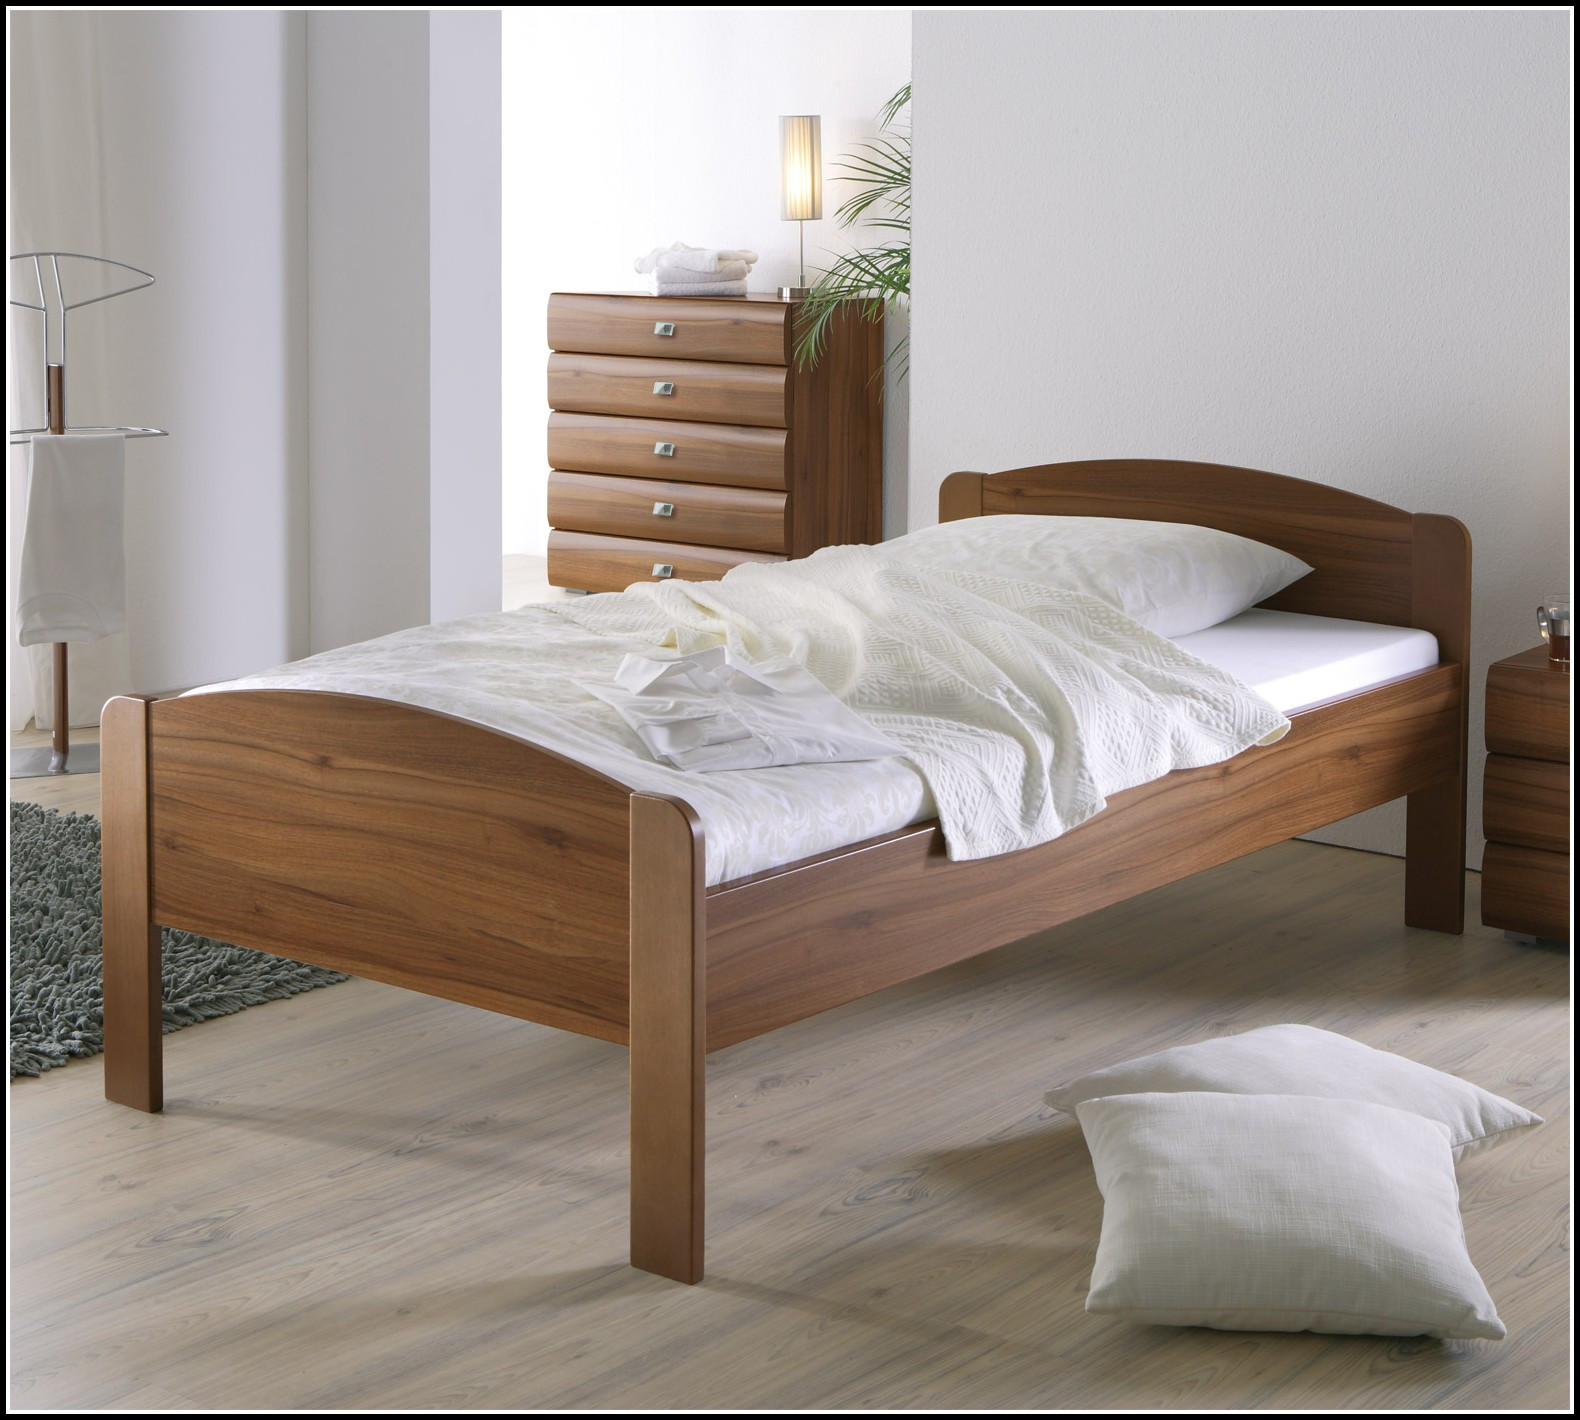 Betten 120x200
 Ikea betten 120x200 weis Download Page – beste Wohnideen